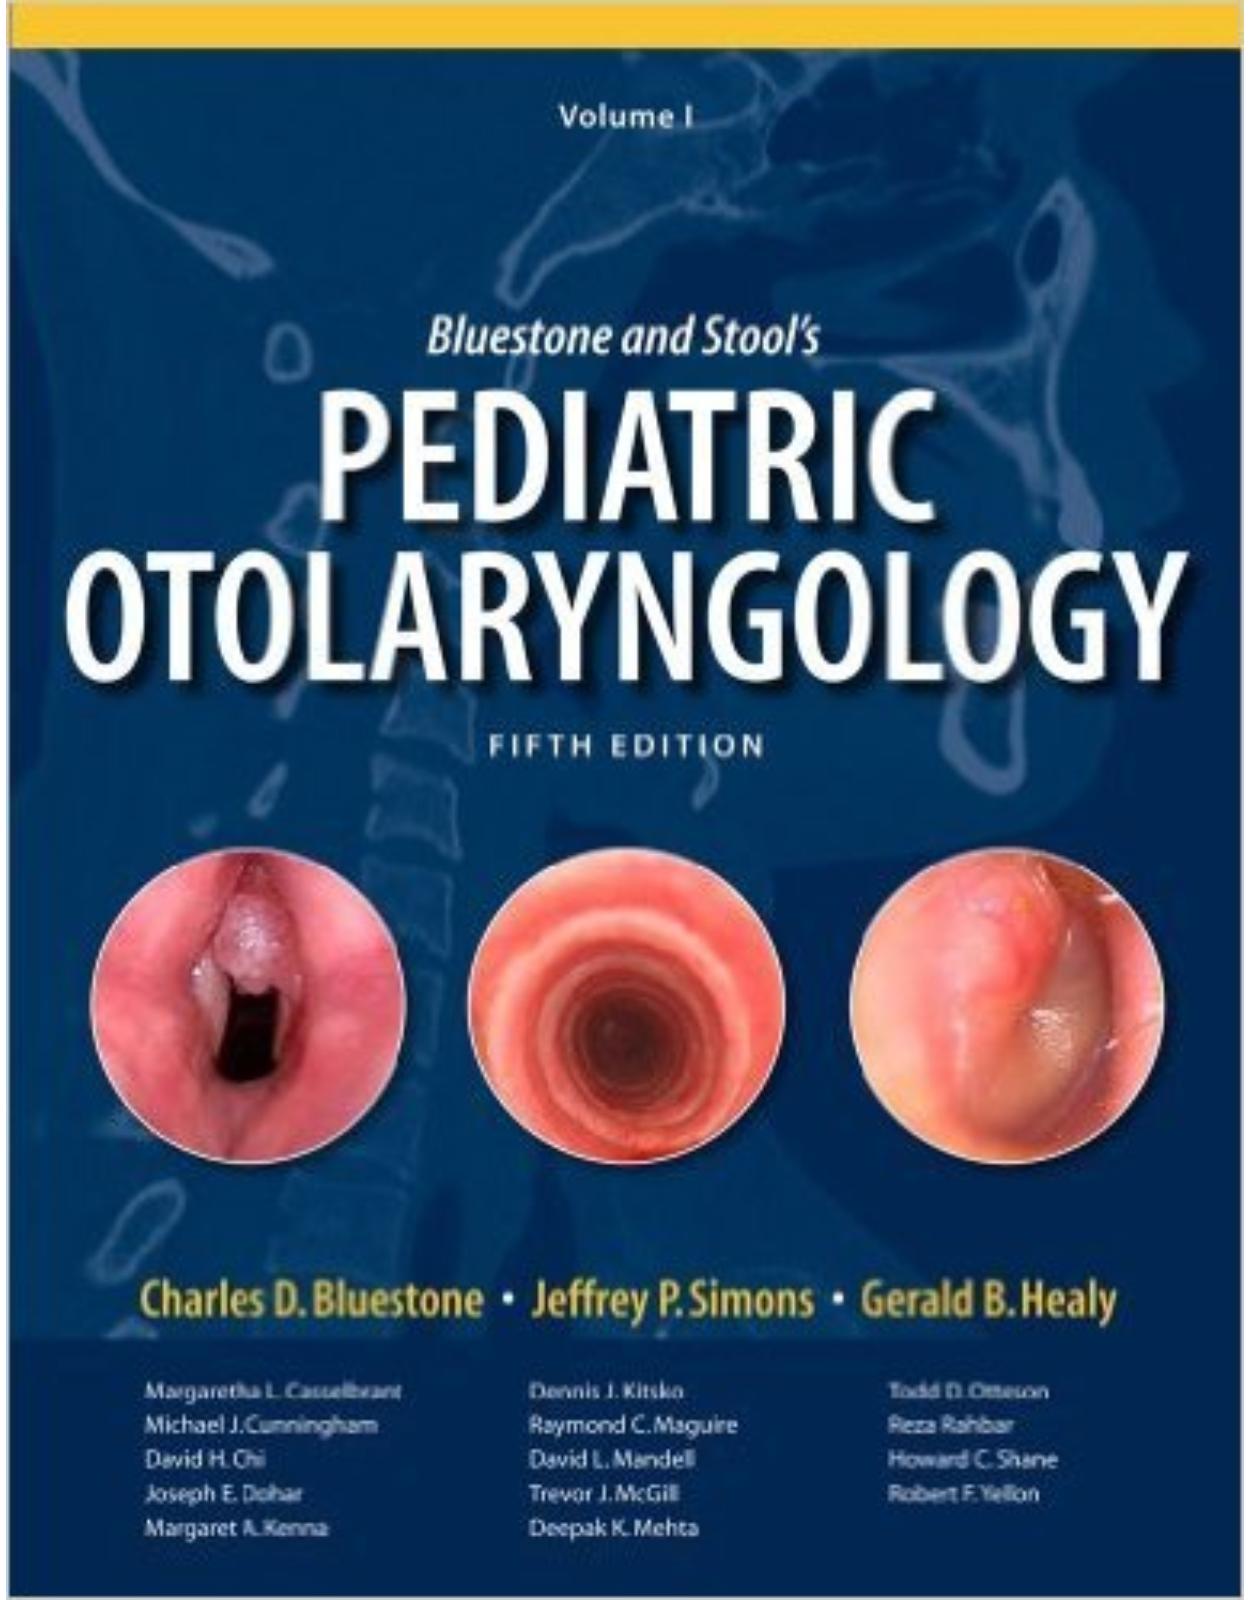 Bluestone and Stool's Pediatric Otolaryngology